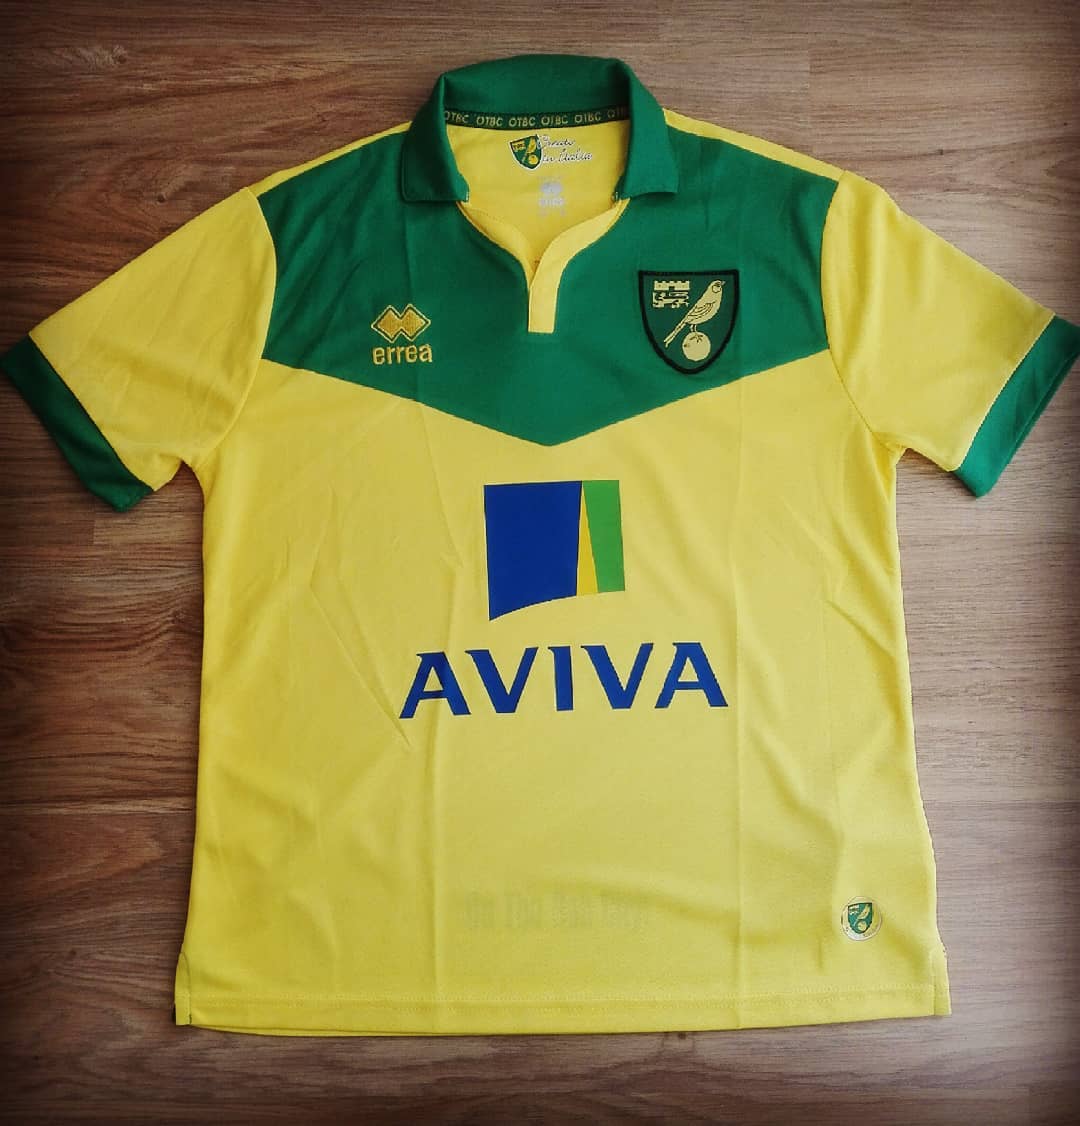 Norwich City Home 2014/2015 Shirt. Club Football Shirts.